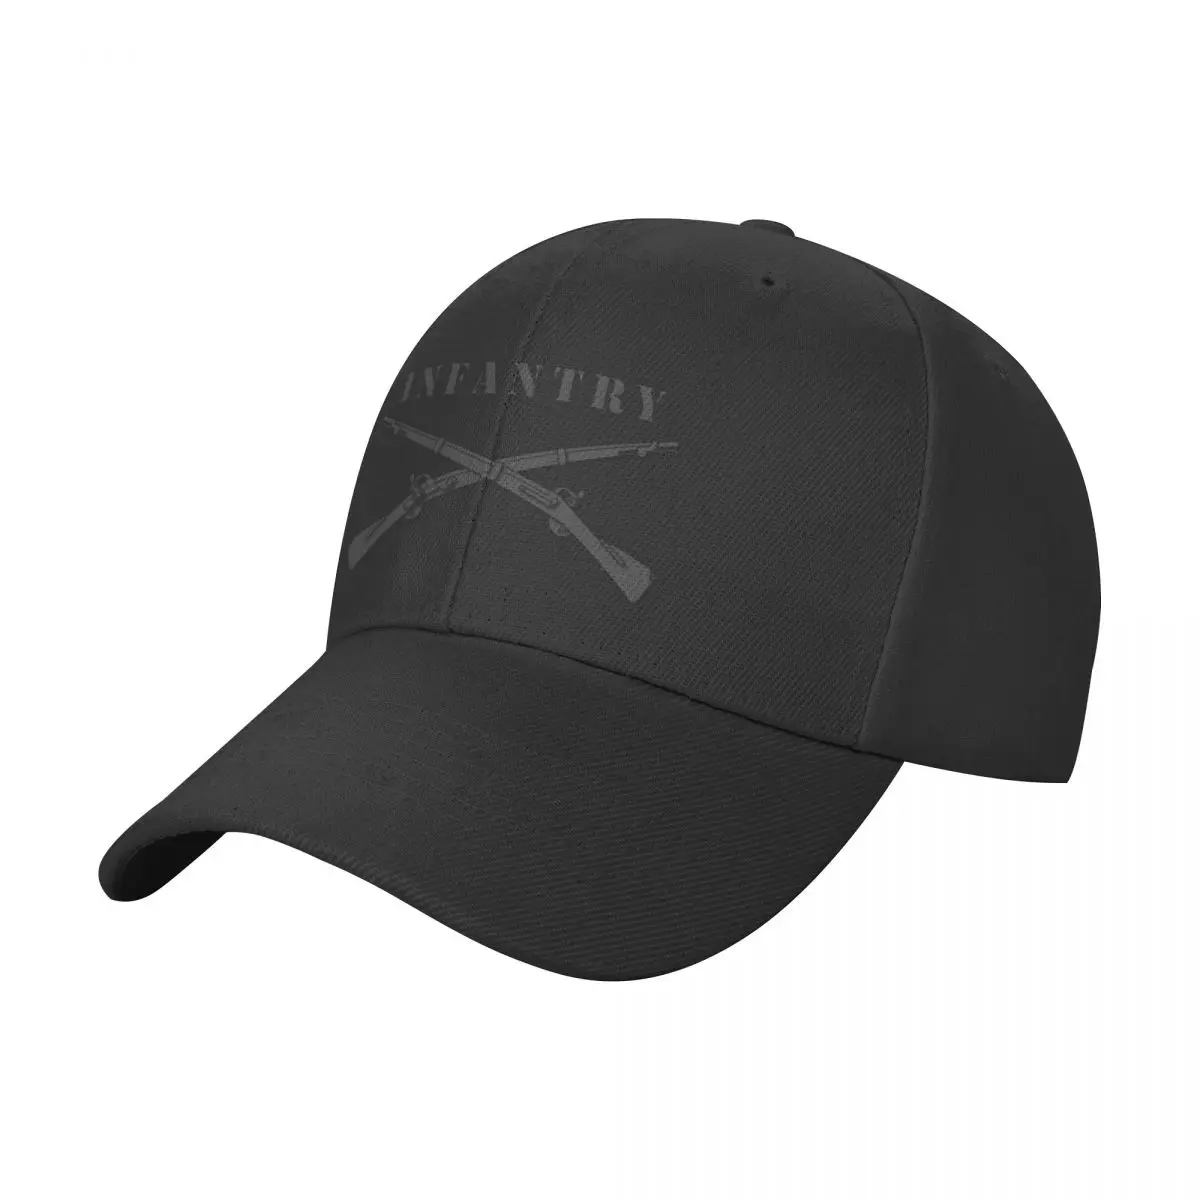 

Army - Infantry Br - Crossed Rifles Blk w Txt Baseball Cap Trucker Hat Uv Protection Solar Hat Big Size Hat Hat For Men Women's